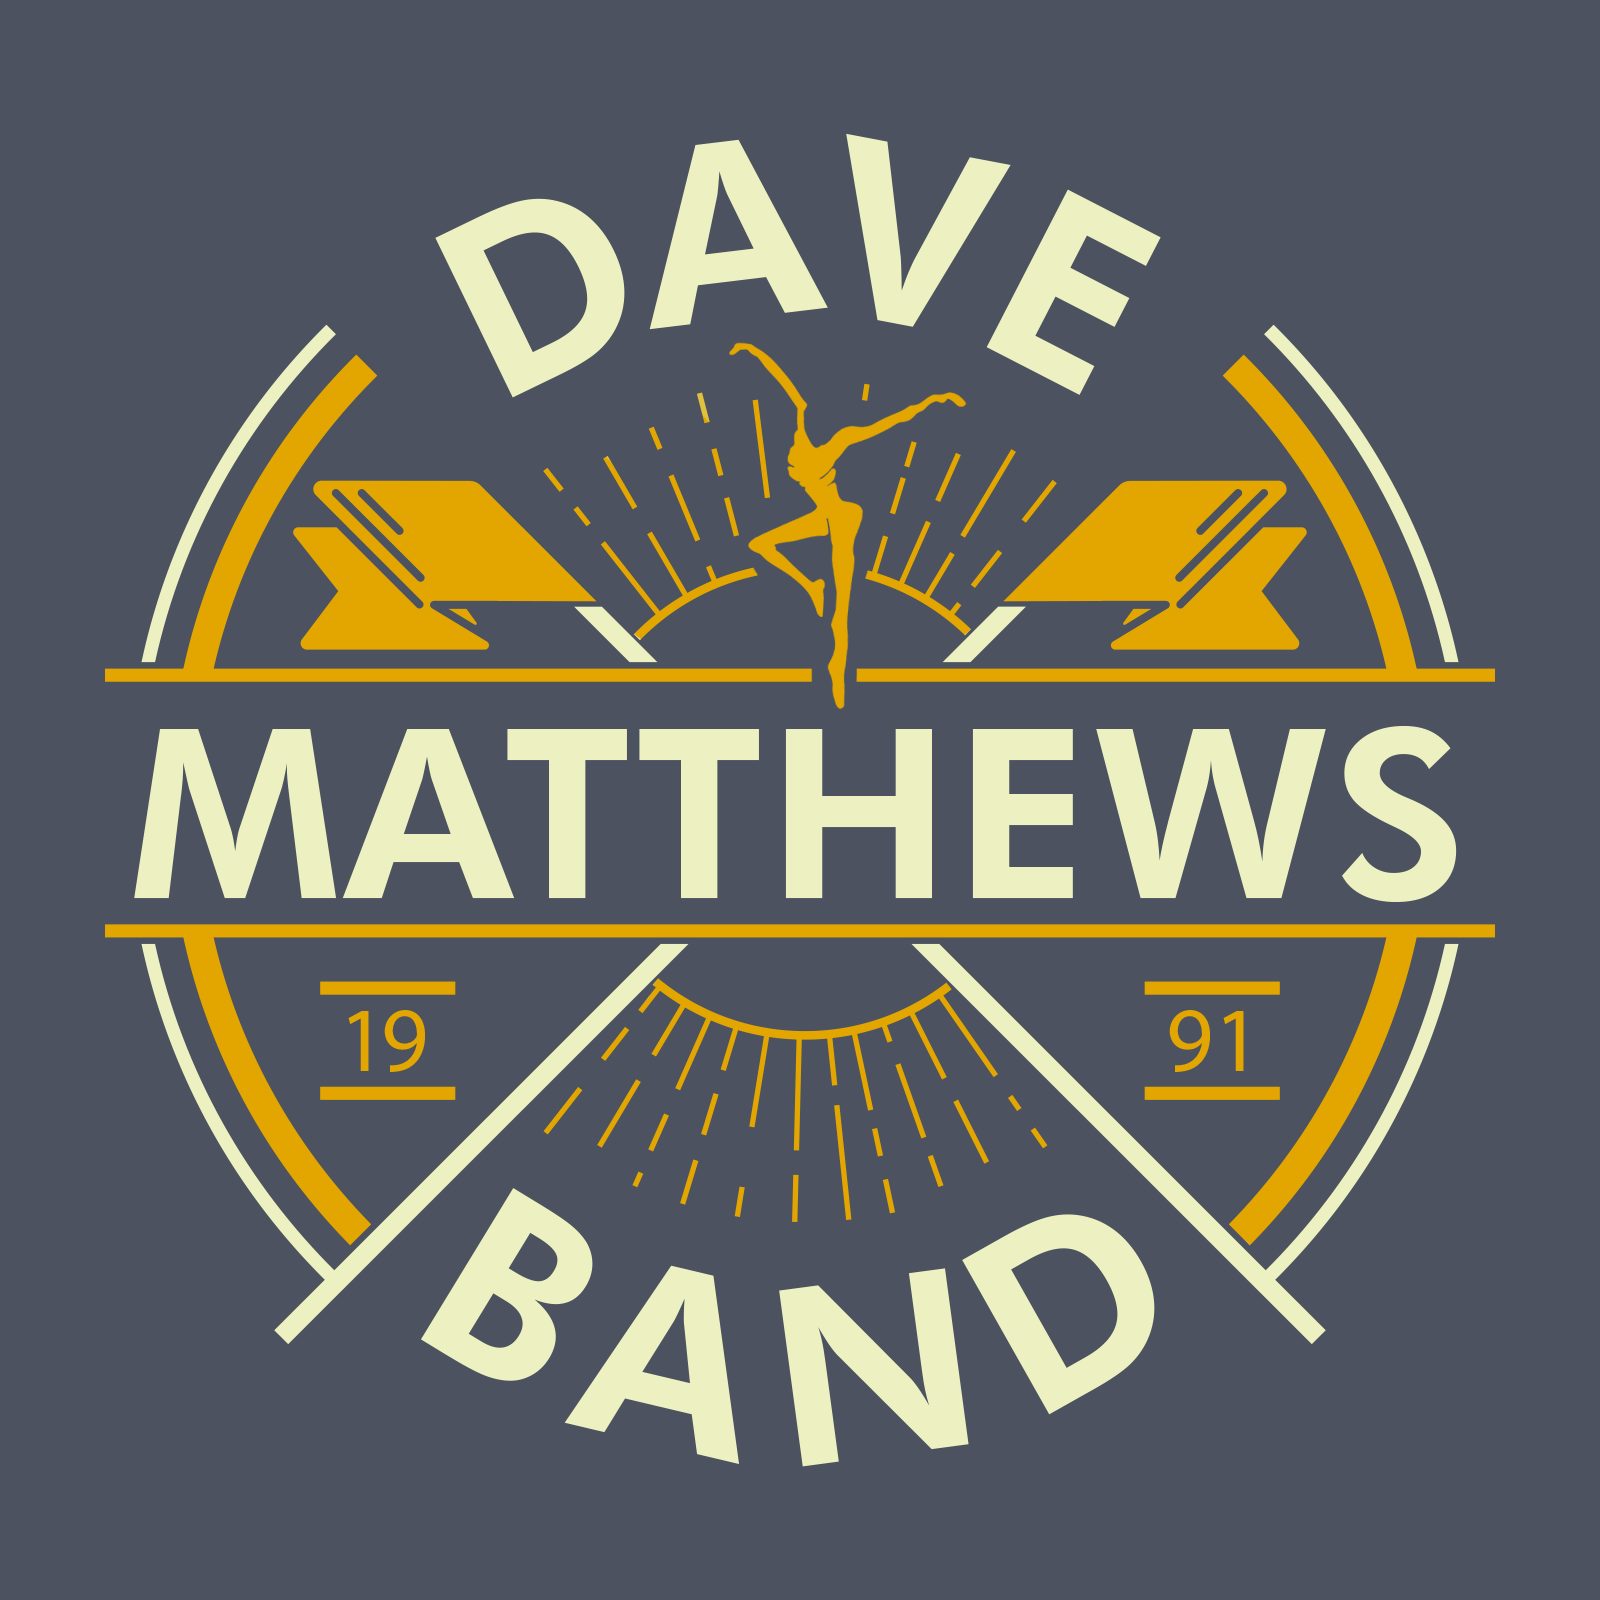 Dave Matthews Band Frisbee Fire Dancer 25 years 1991-2016 Yellow 6oz RARE 